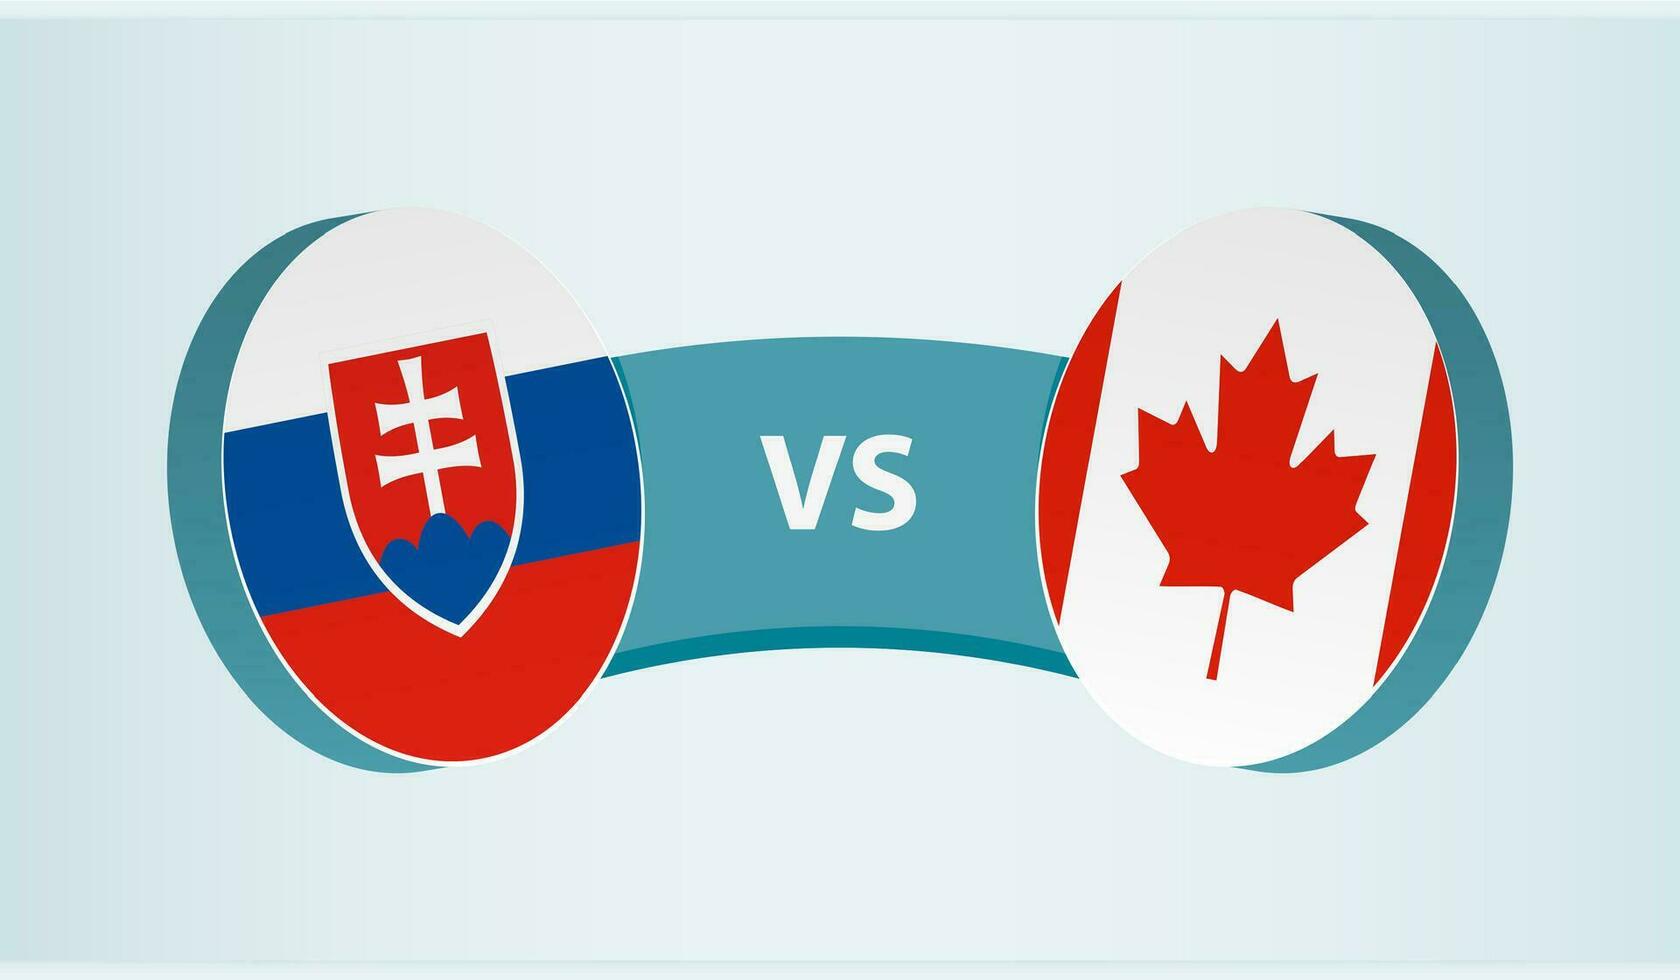 slovakia mot Kanada, team sporter konkurrens begrepp. vektor